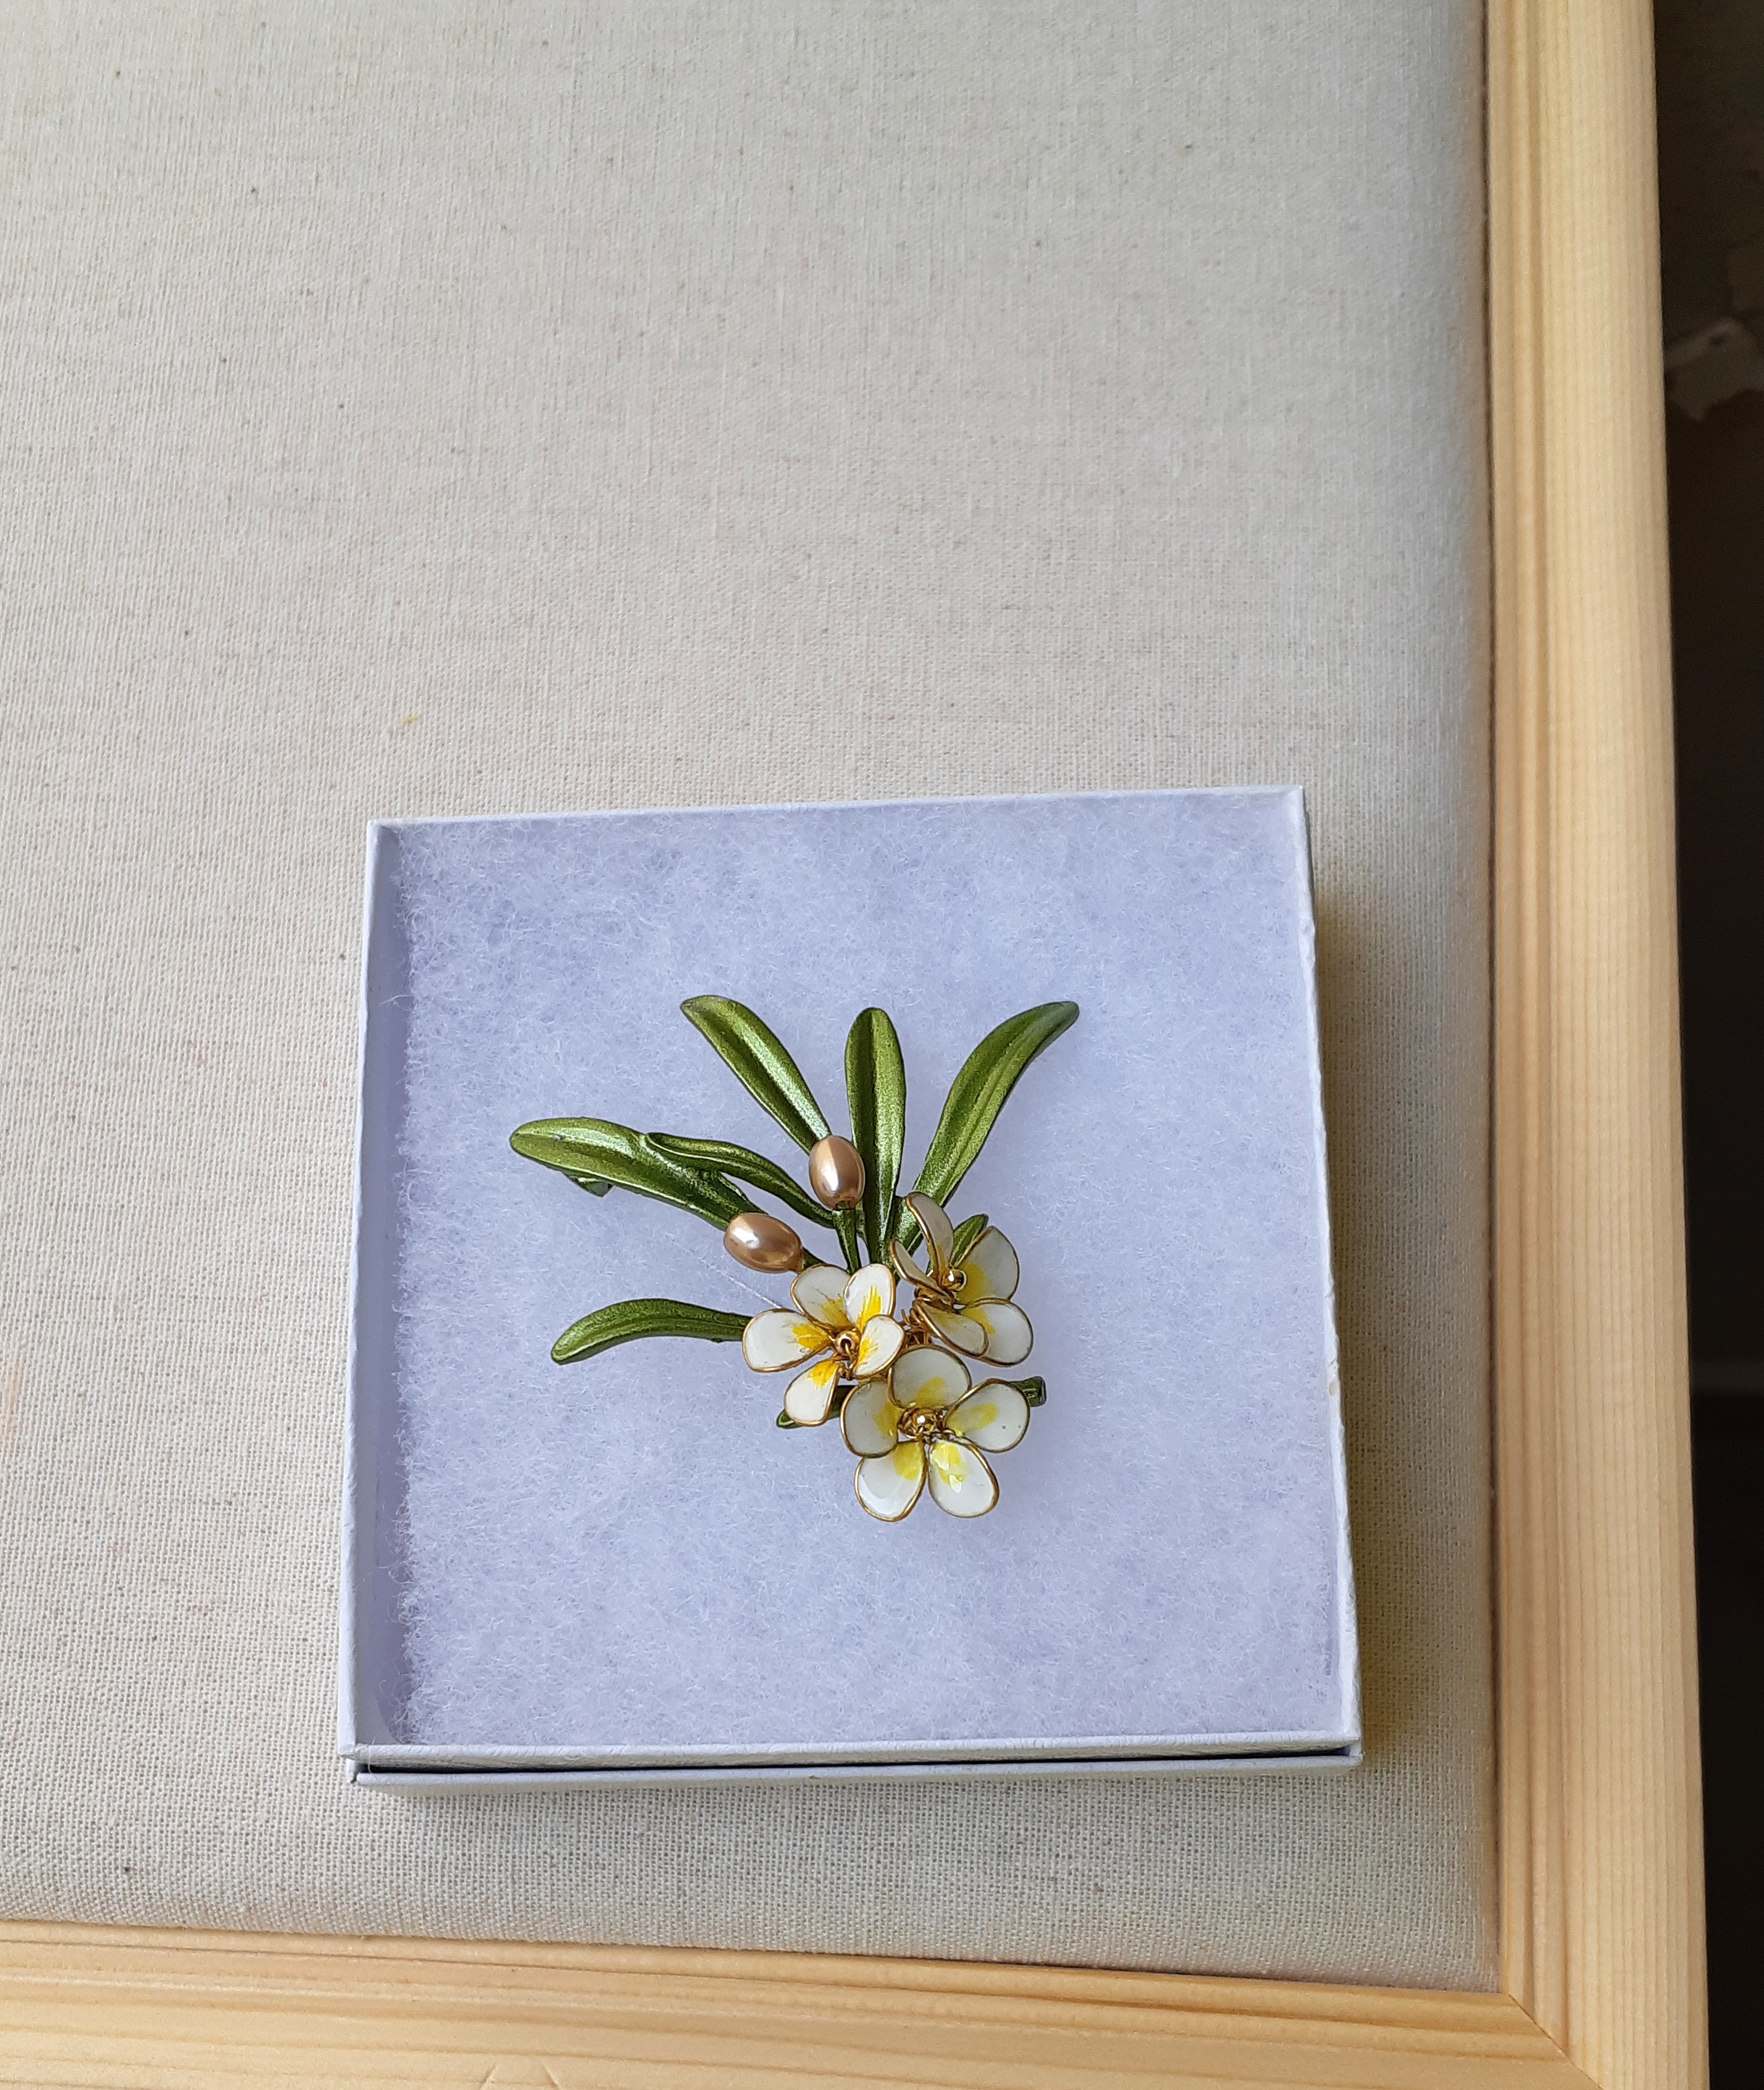 Frangipani/Plumeria flower brooch pin